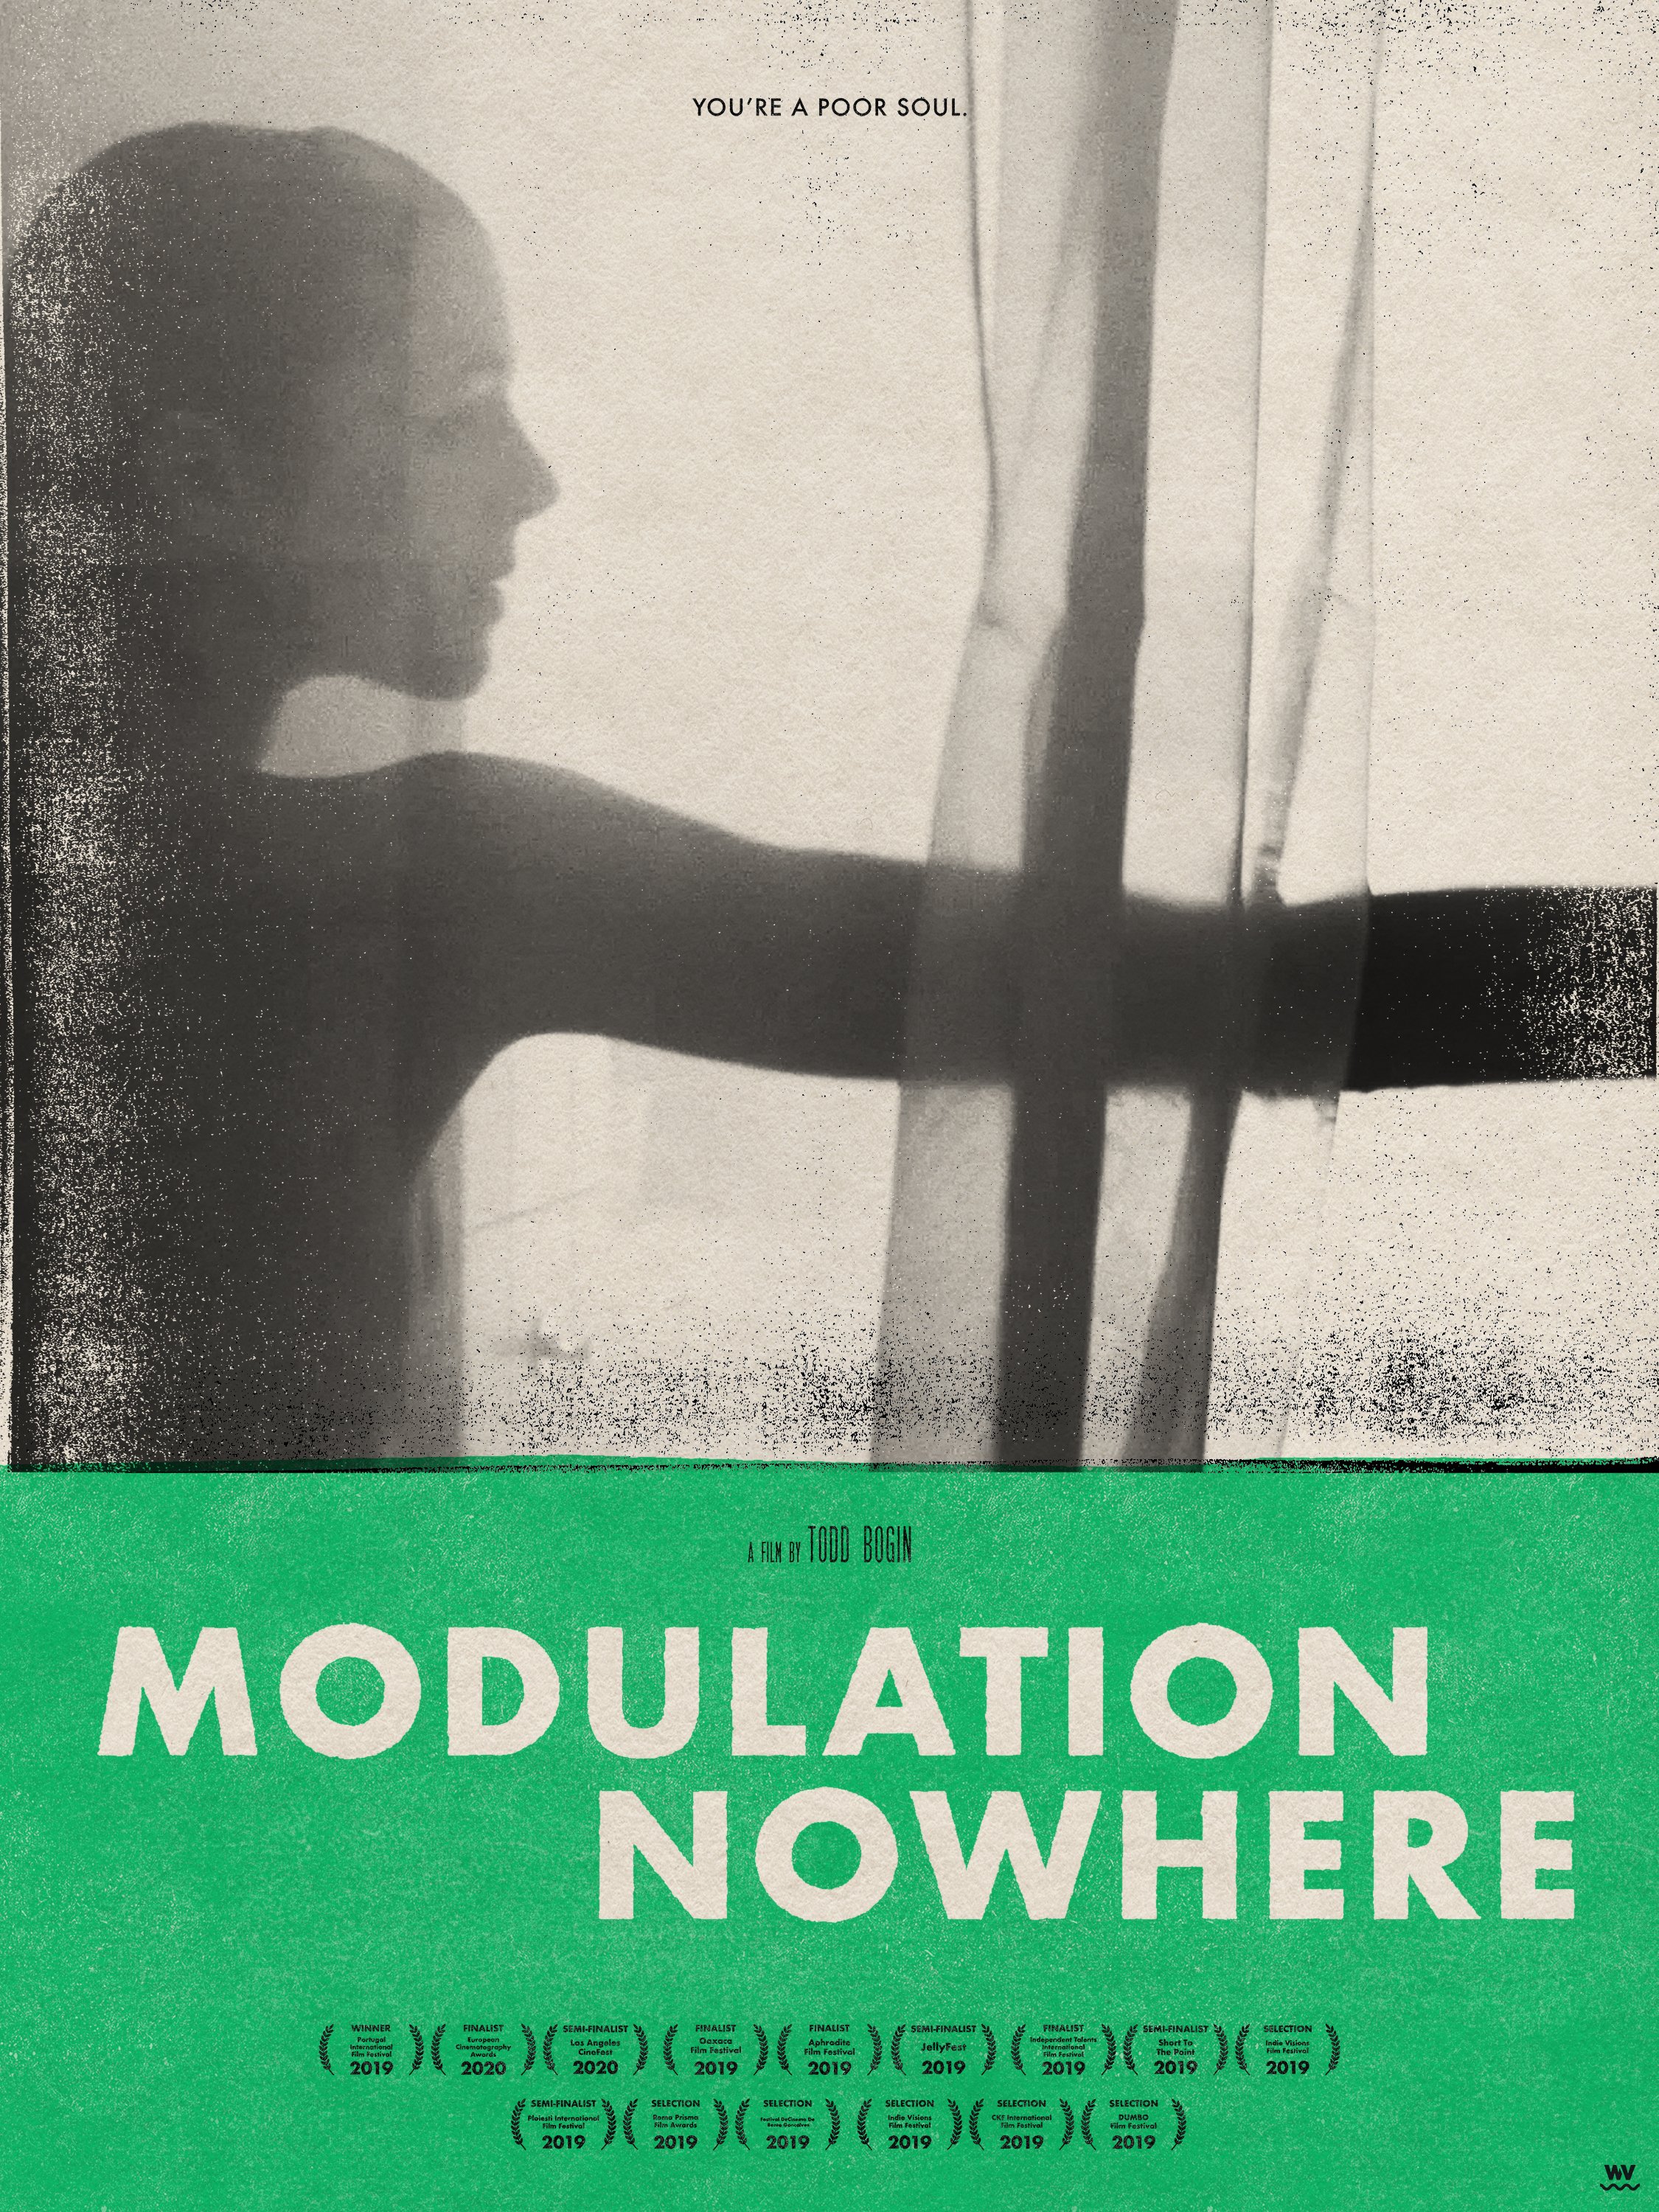 modulation nowhere_poster_green.jpg